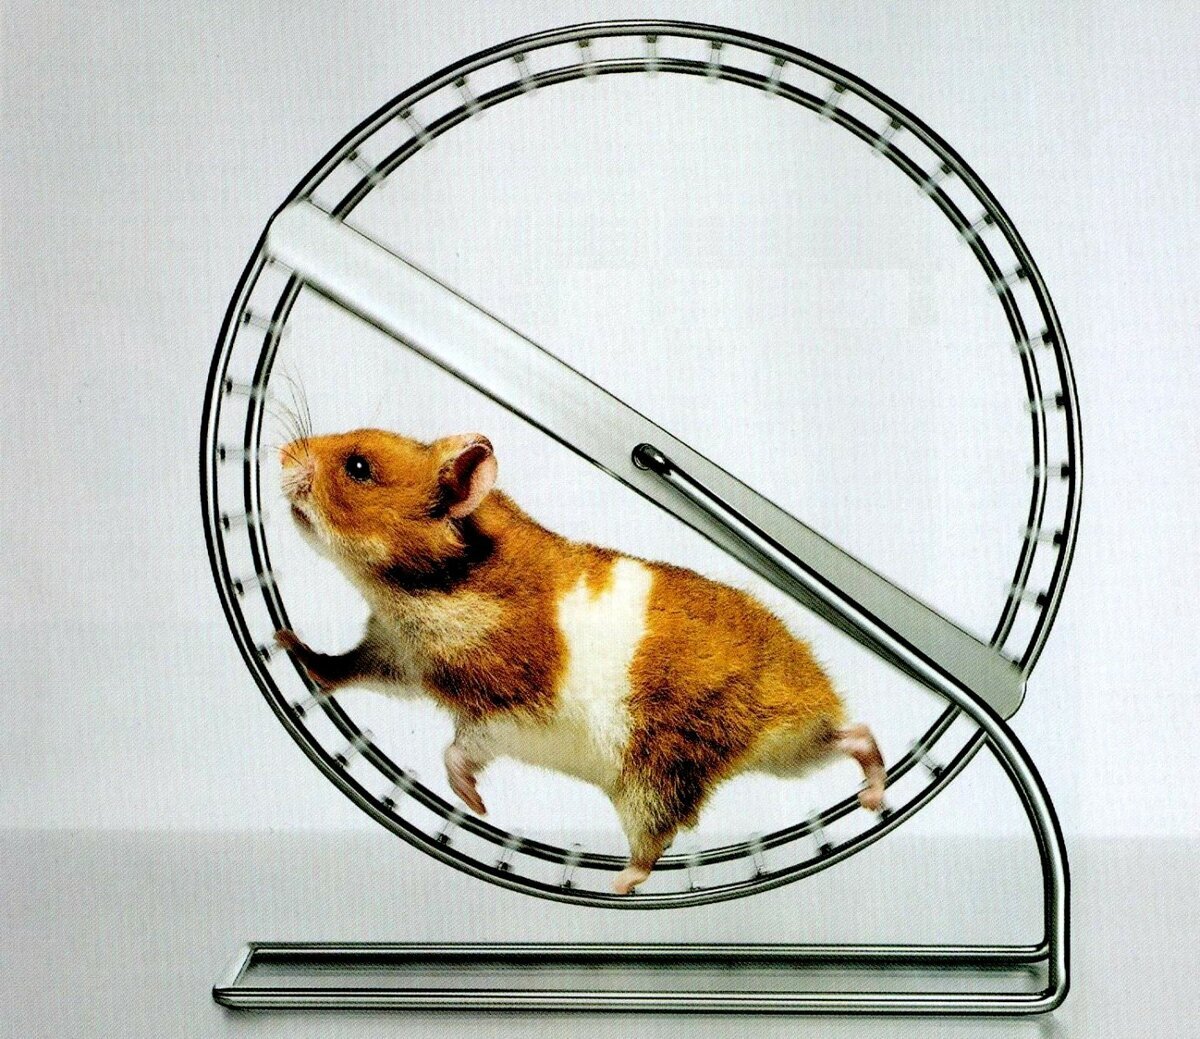 Violin hamster. Хомяк в колесе. Хомяк бежит в колесе. Хомячок бегает в колесе. Круг для хомяка.